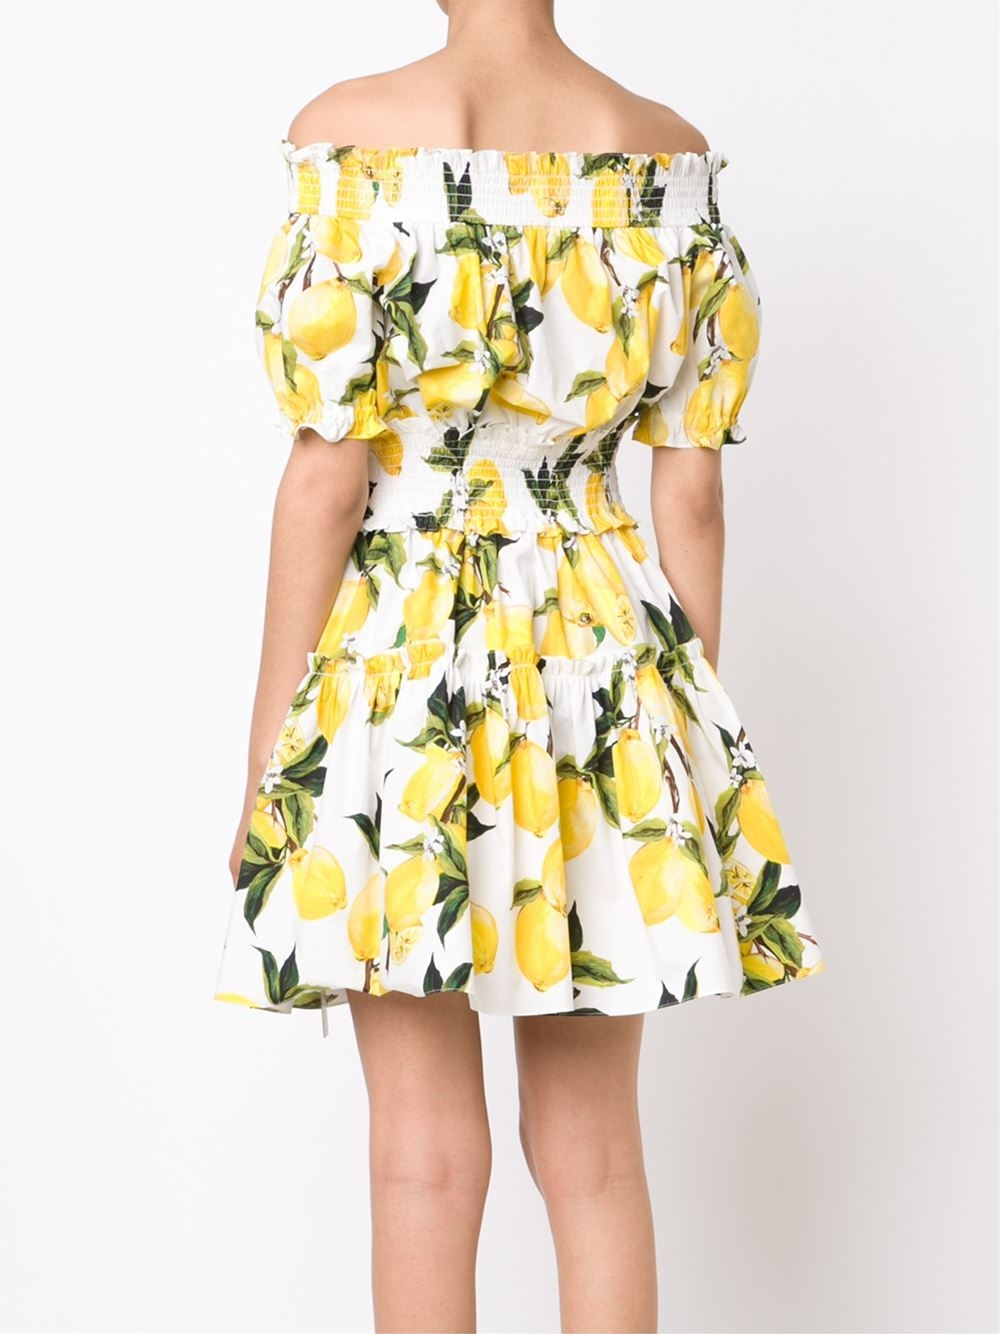 Dolce & Gabbana Lemon Print Dress in Yellow - Lyst